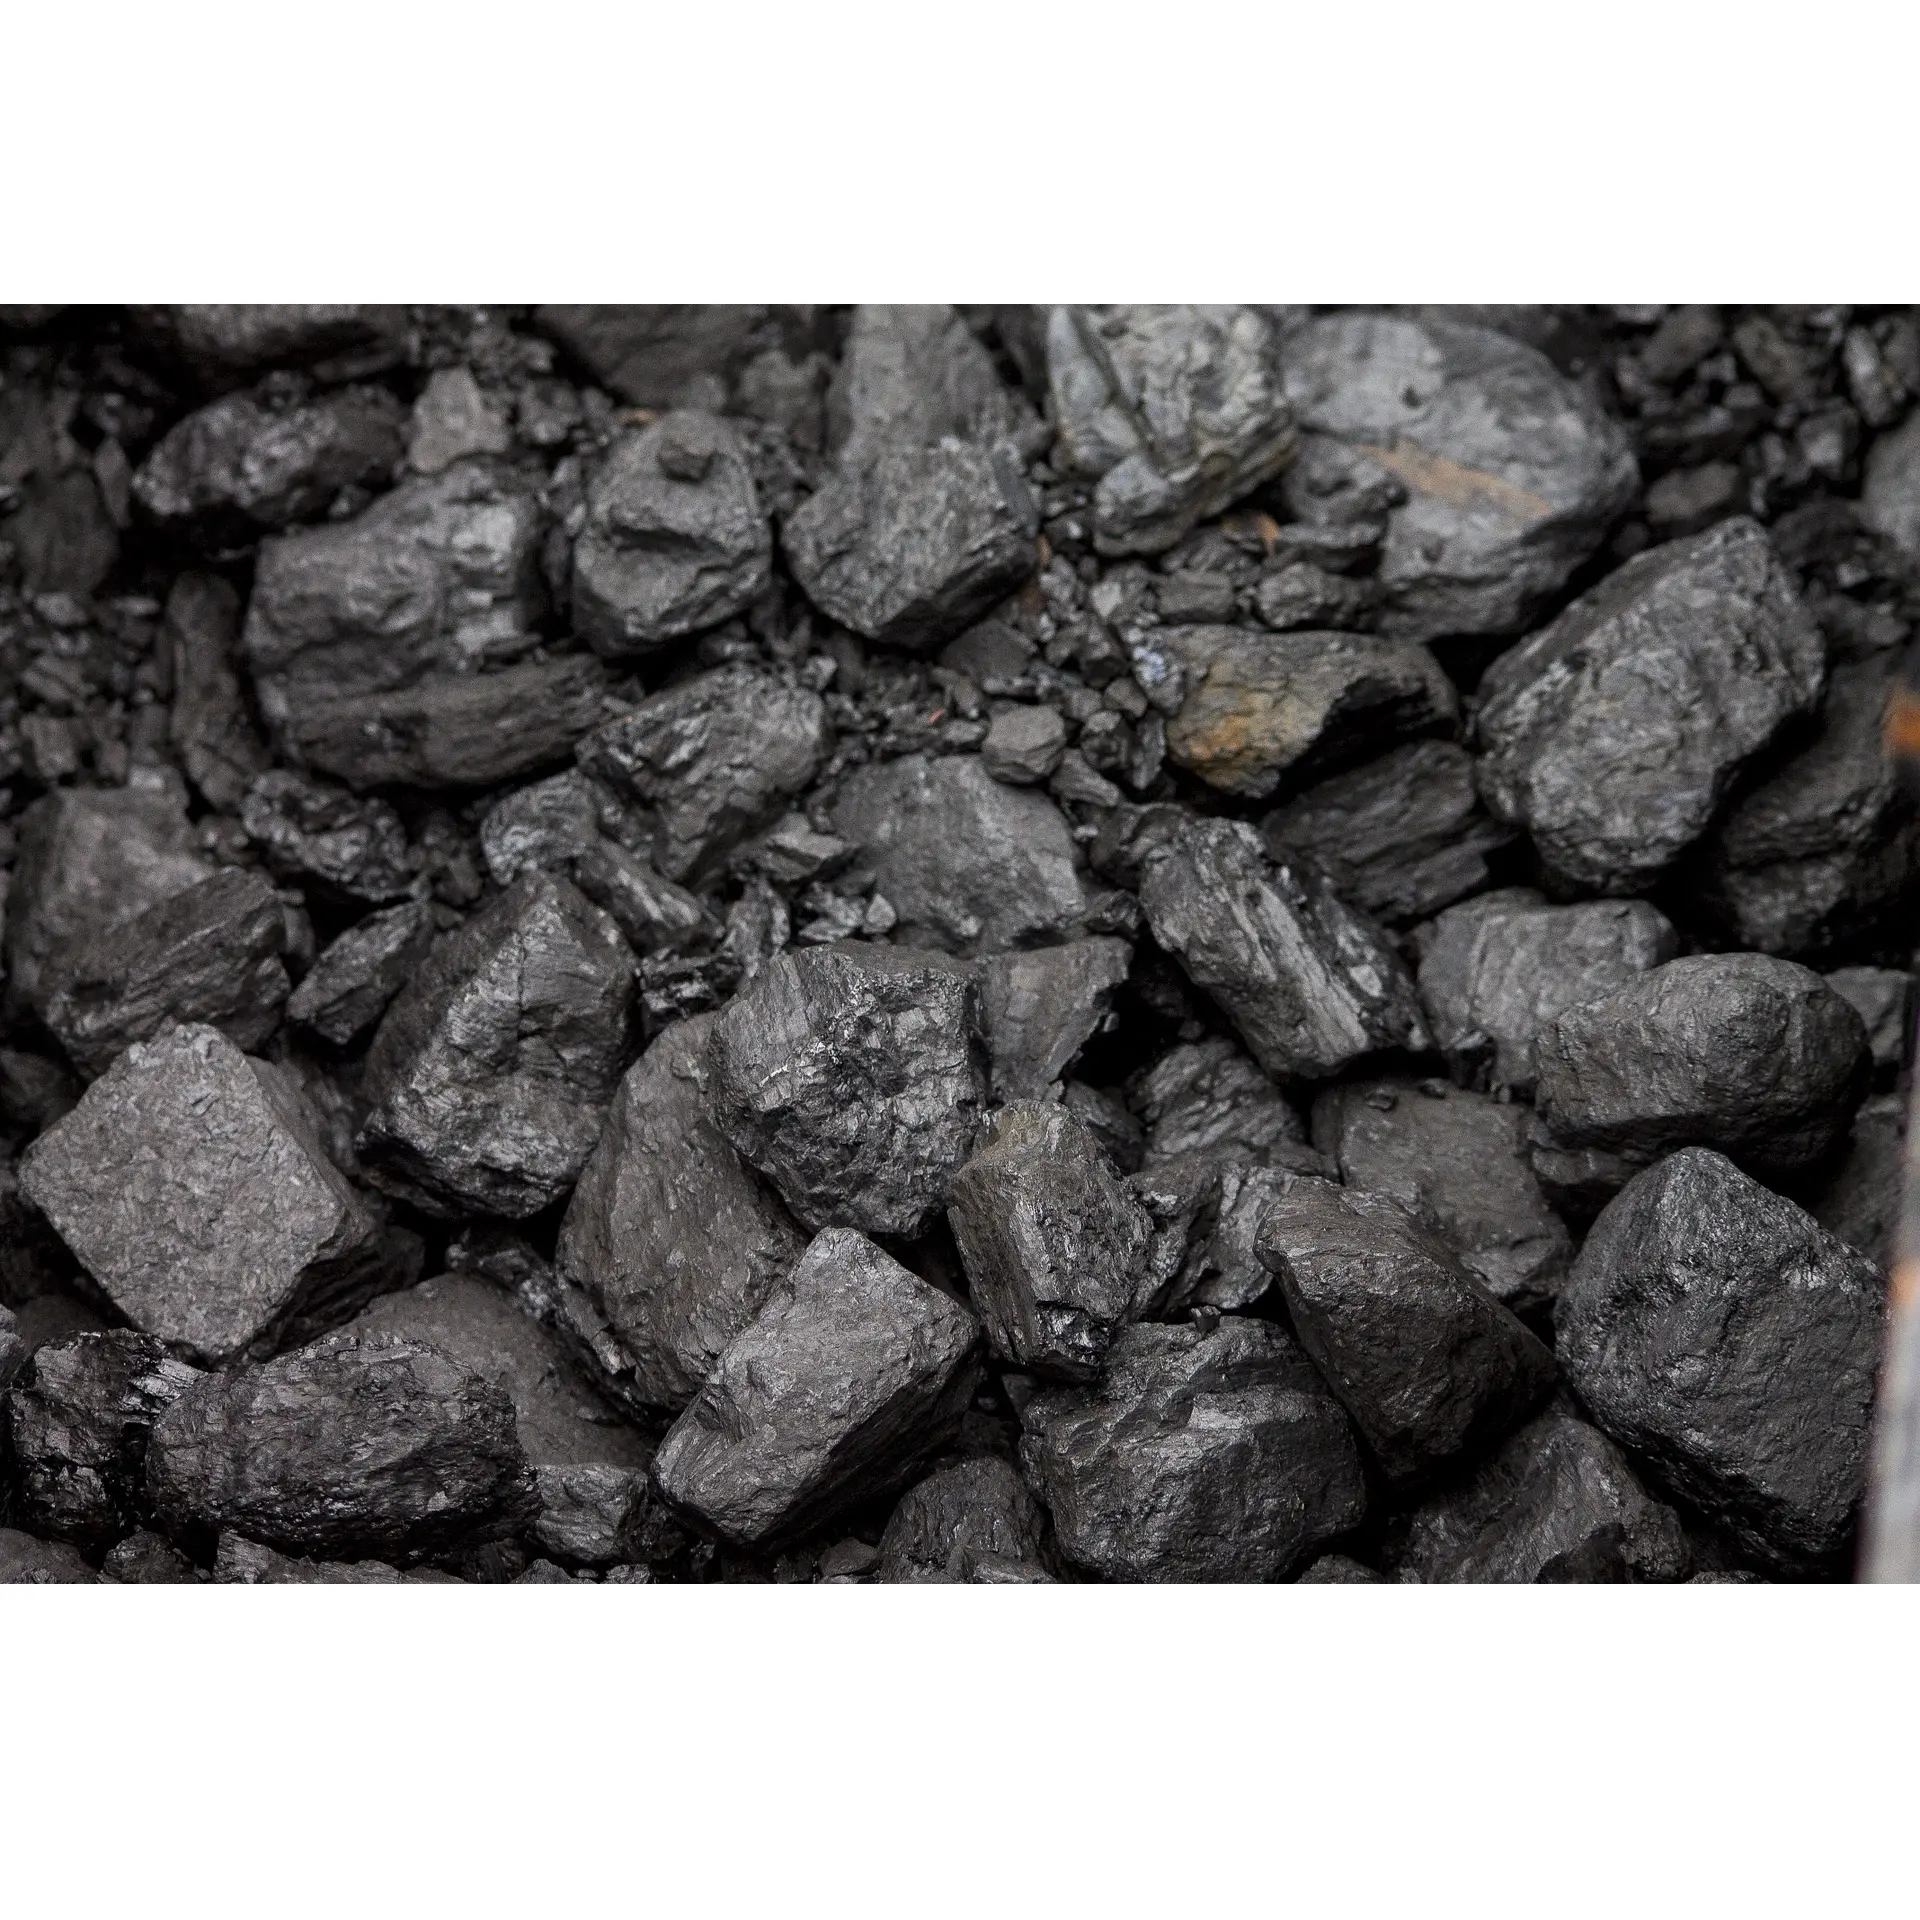 Coal and steam фото 101